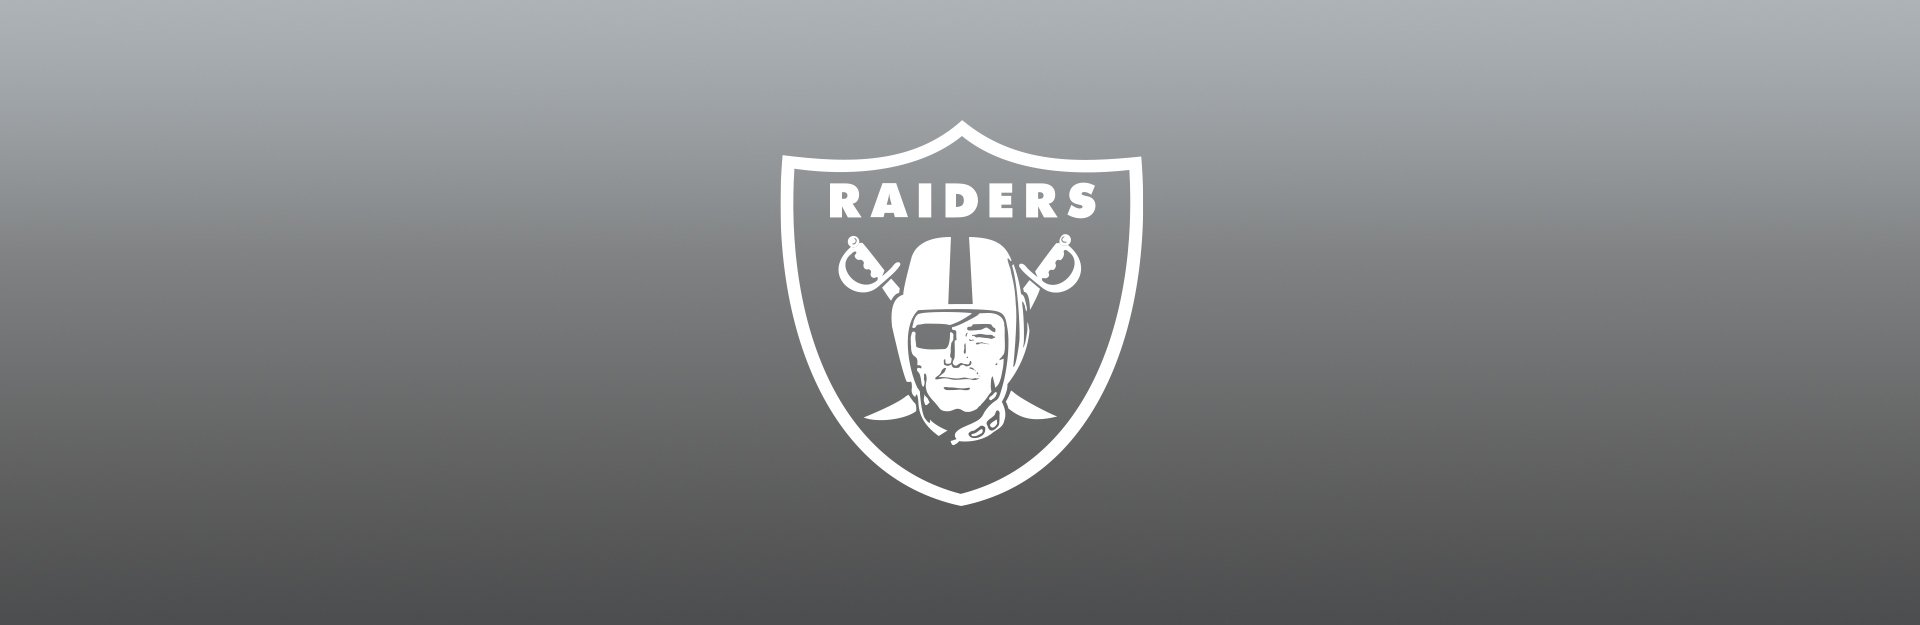 Las Vegas Raiders logo on gray background